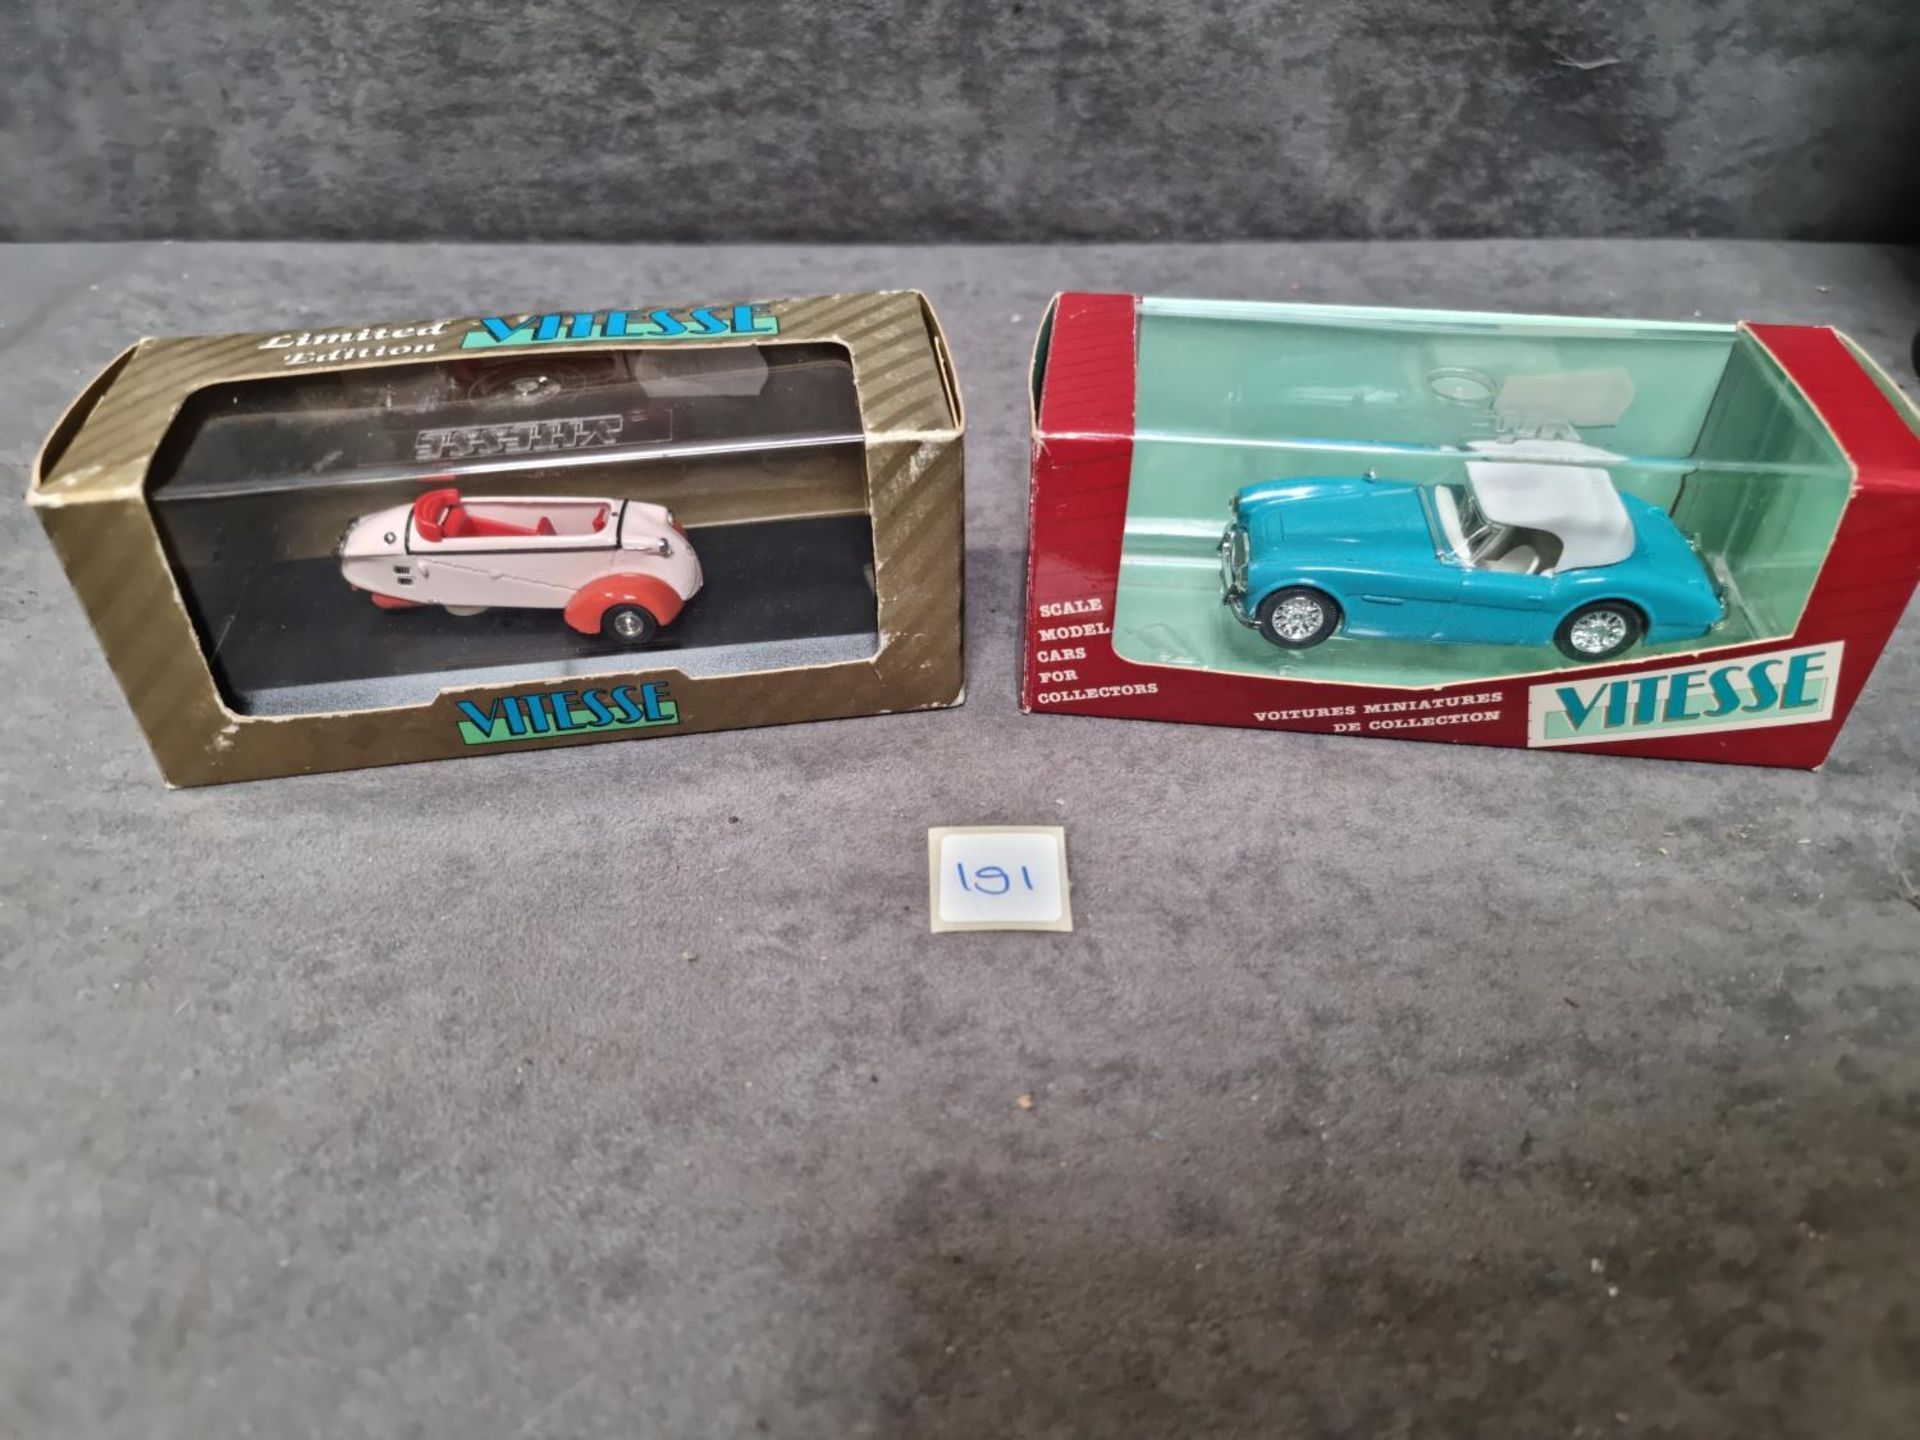 2 x Vitesse Models #173 1/43 Scale 173 - Austin Healey 3000 Closed Cabrio - Met Lgt. Blue/White #